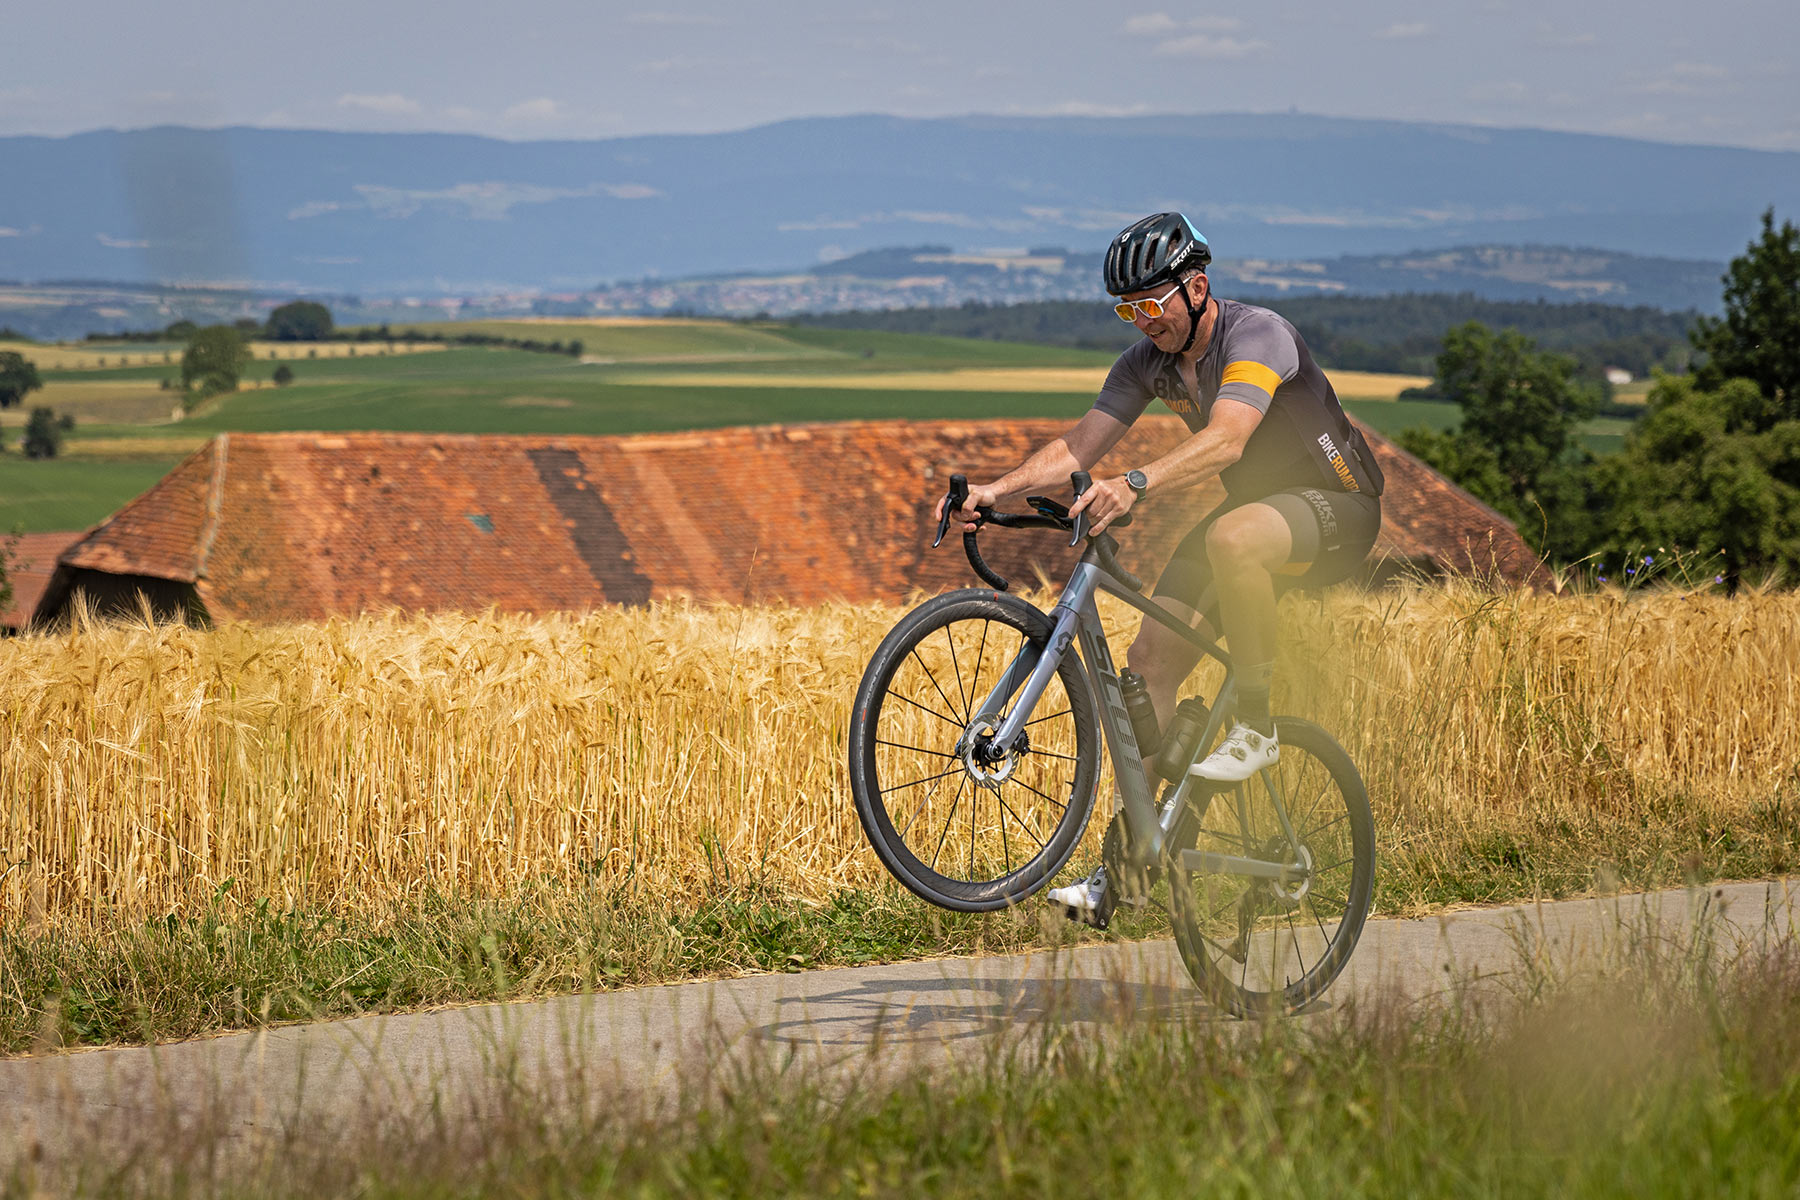 Schwalbe Pro One Aero front-specific & rear-specific aerodynamic racing TT road bike tires, riding Switzerland